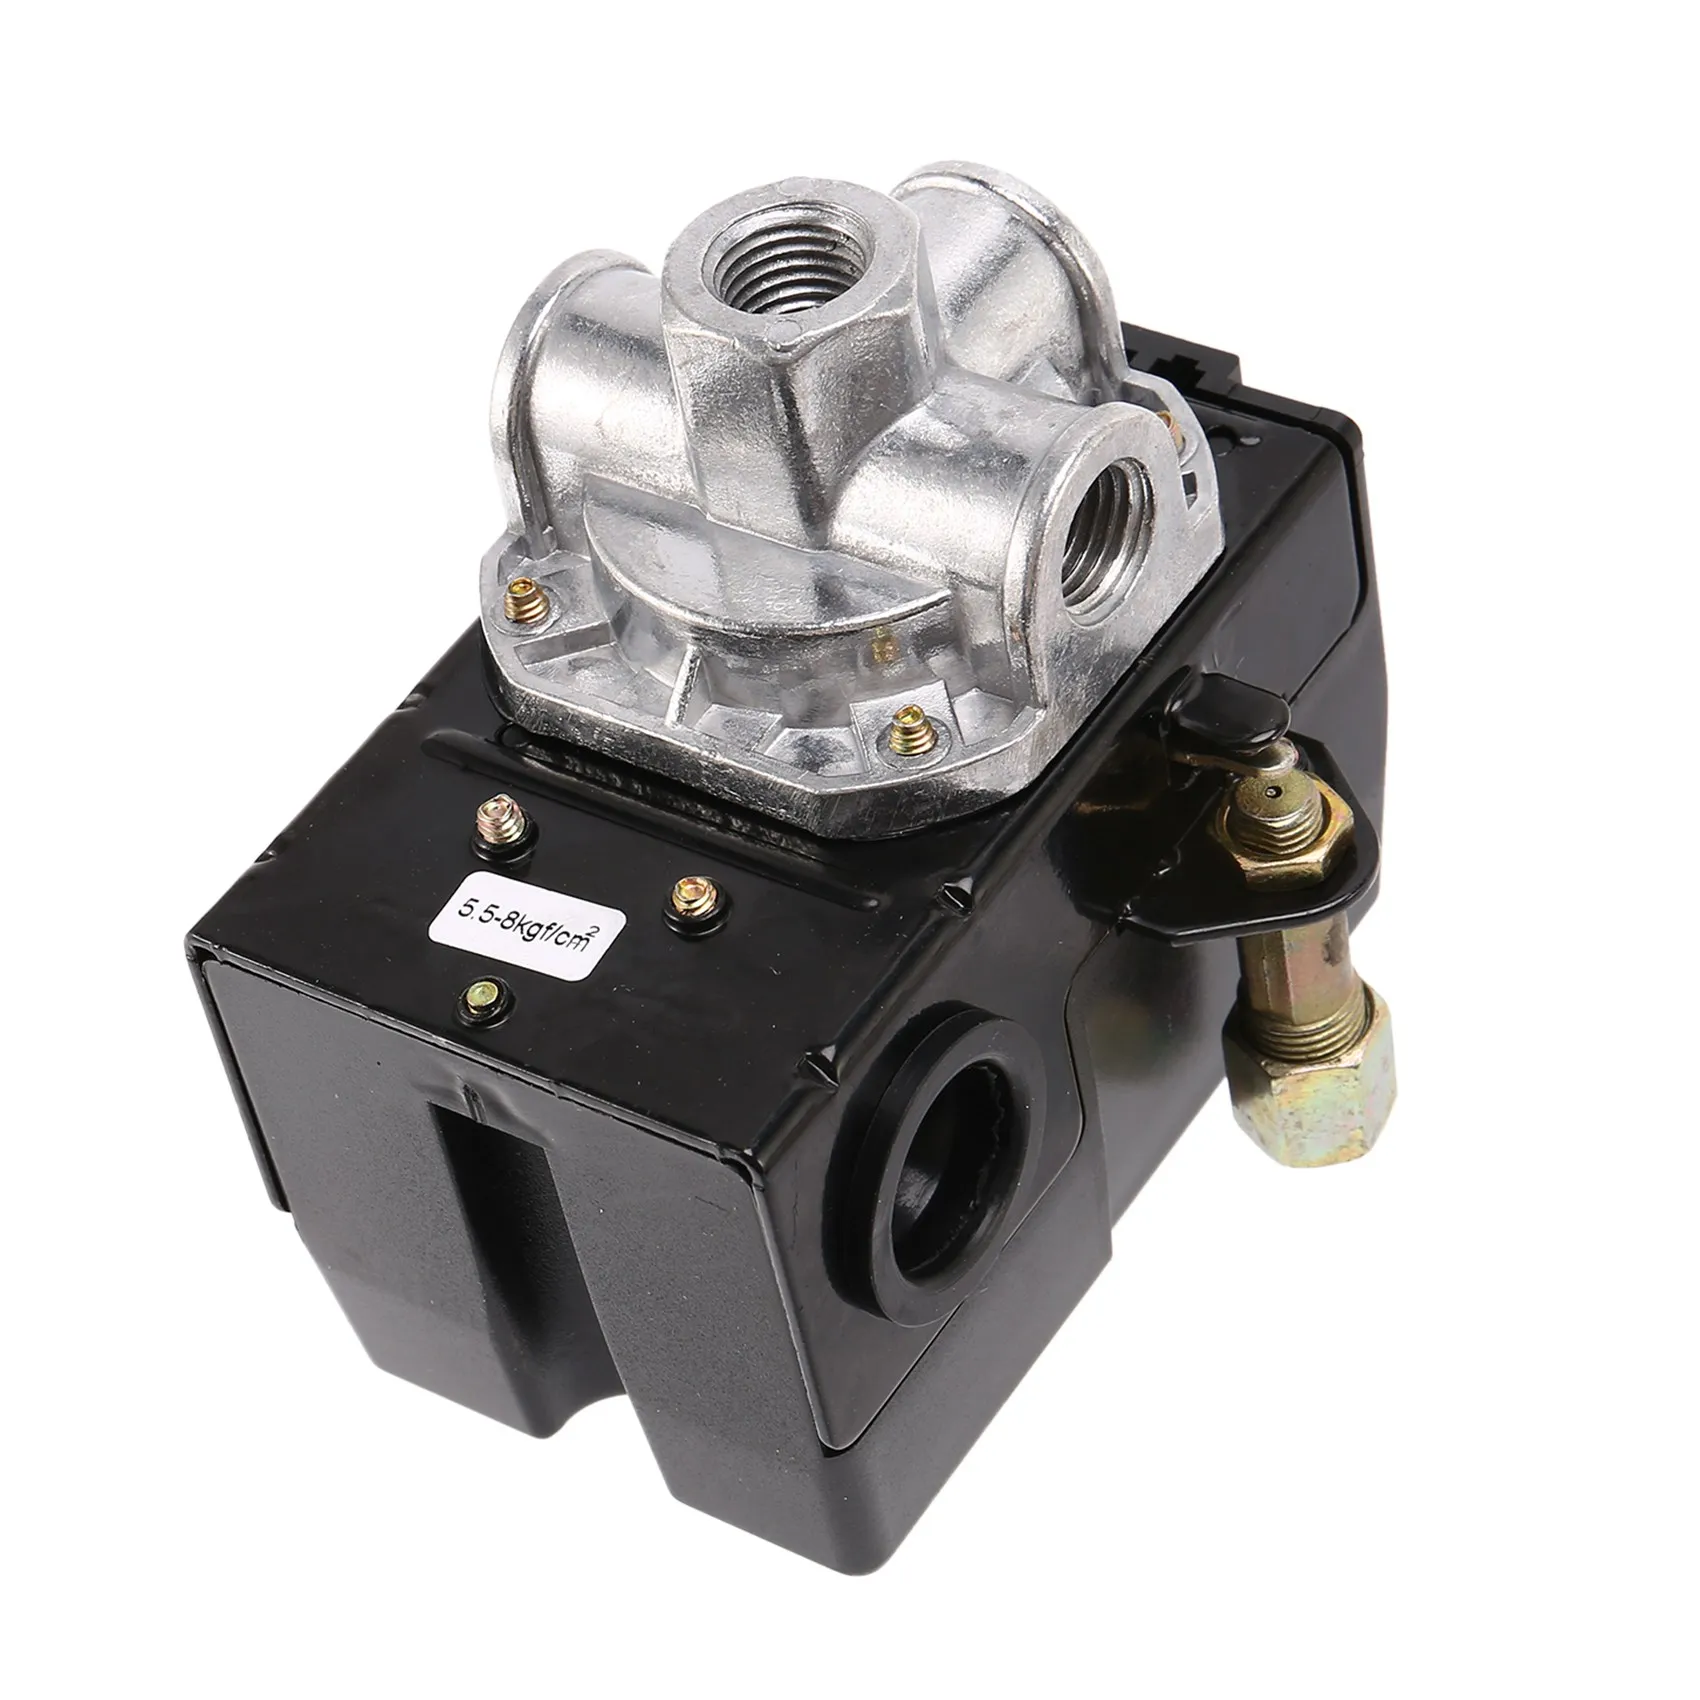 

5-8Kg 4-Port 26 Amp Pressure Switch Control Valve Air Compressor Heavy Duty Black Automatic Pressure Controller